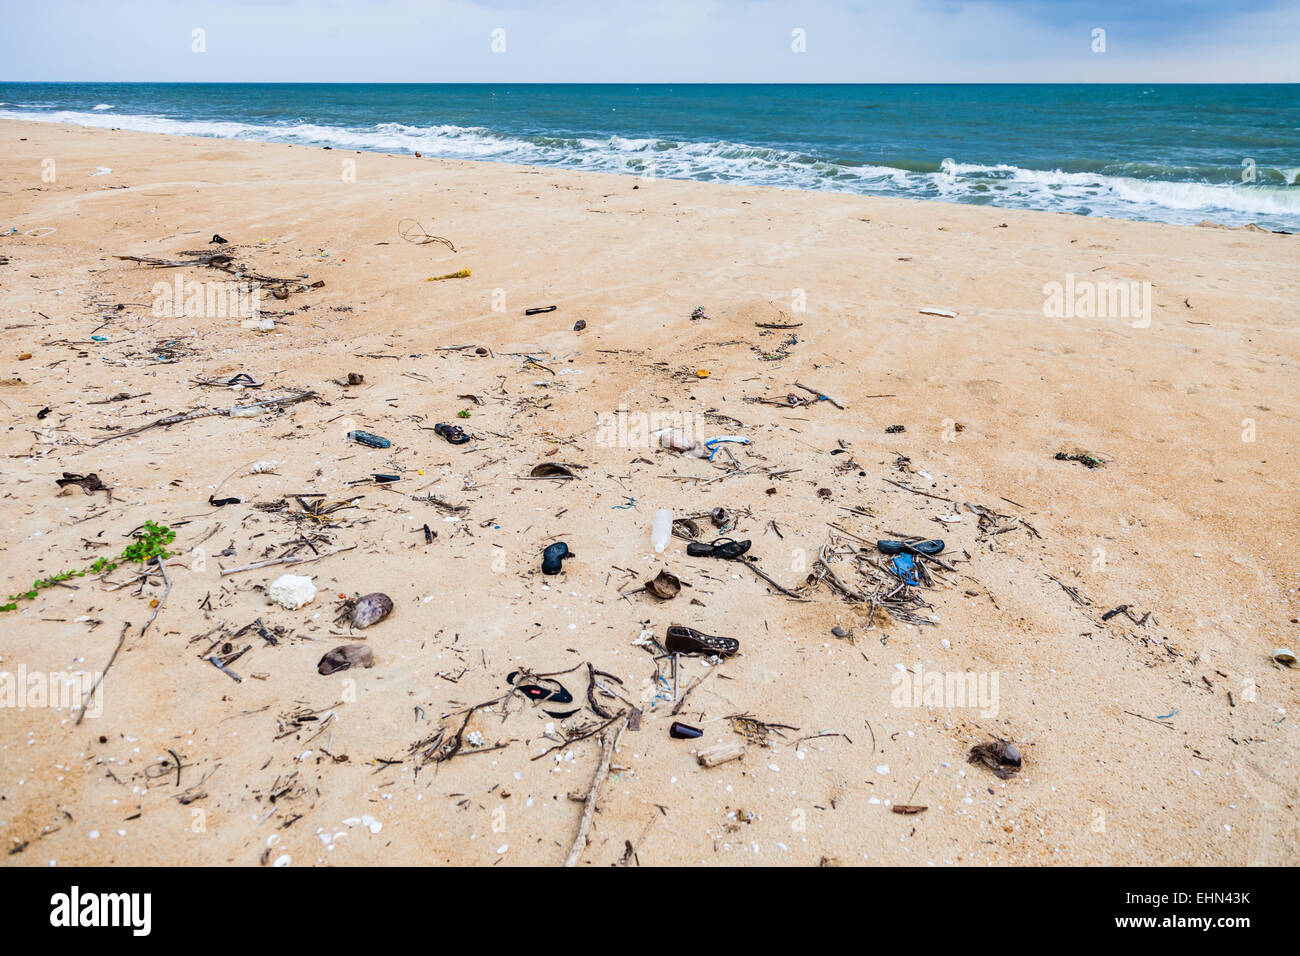 Waste on a beach in Kerala, India. Stock Photo